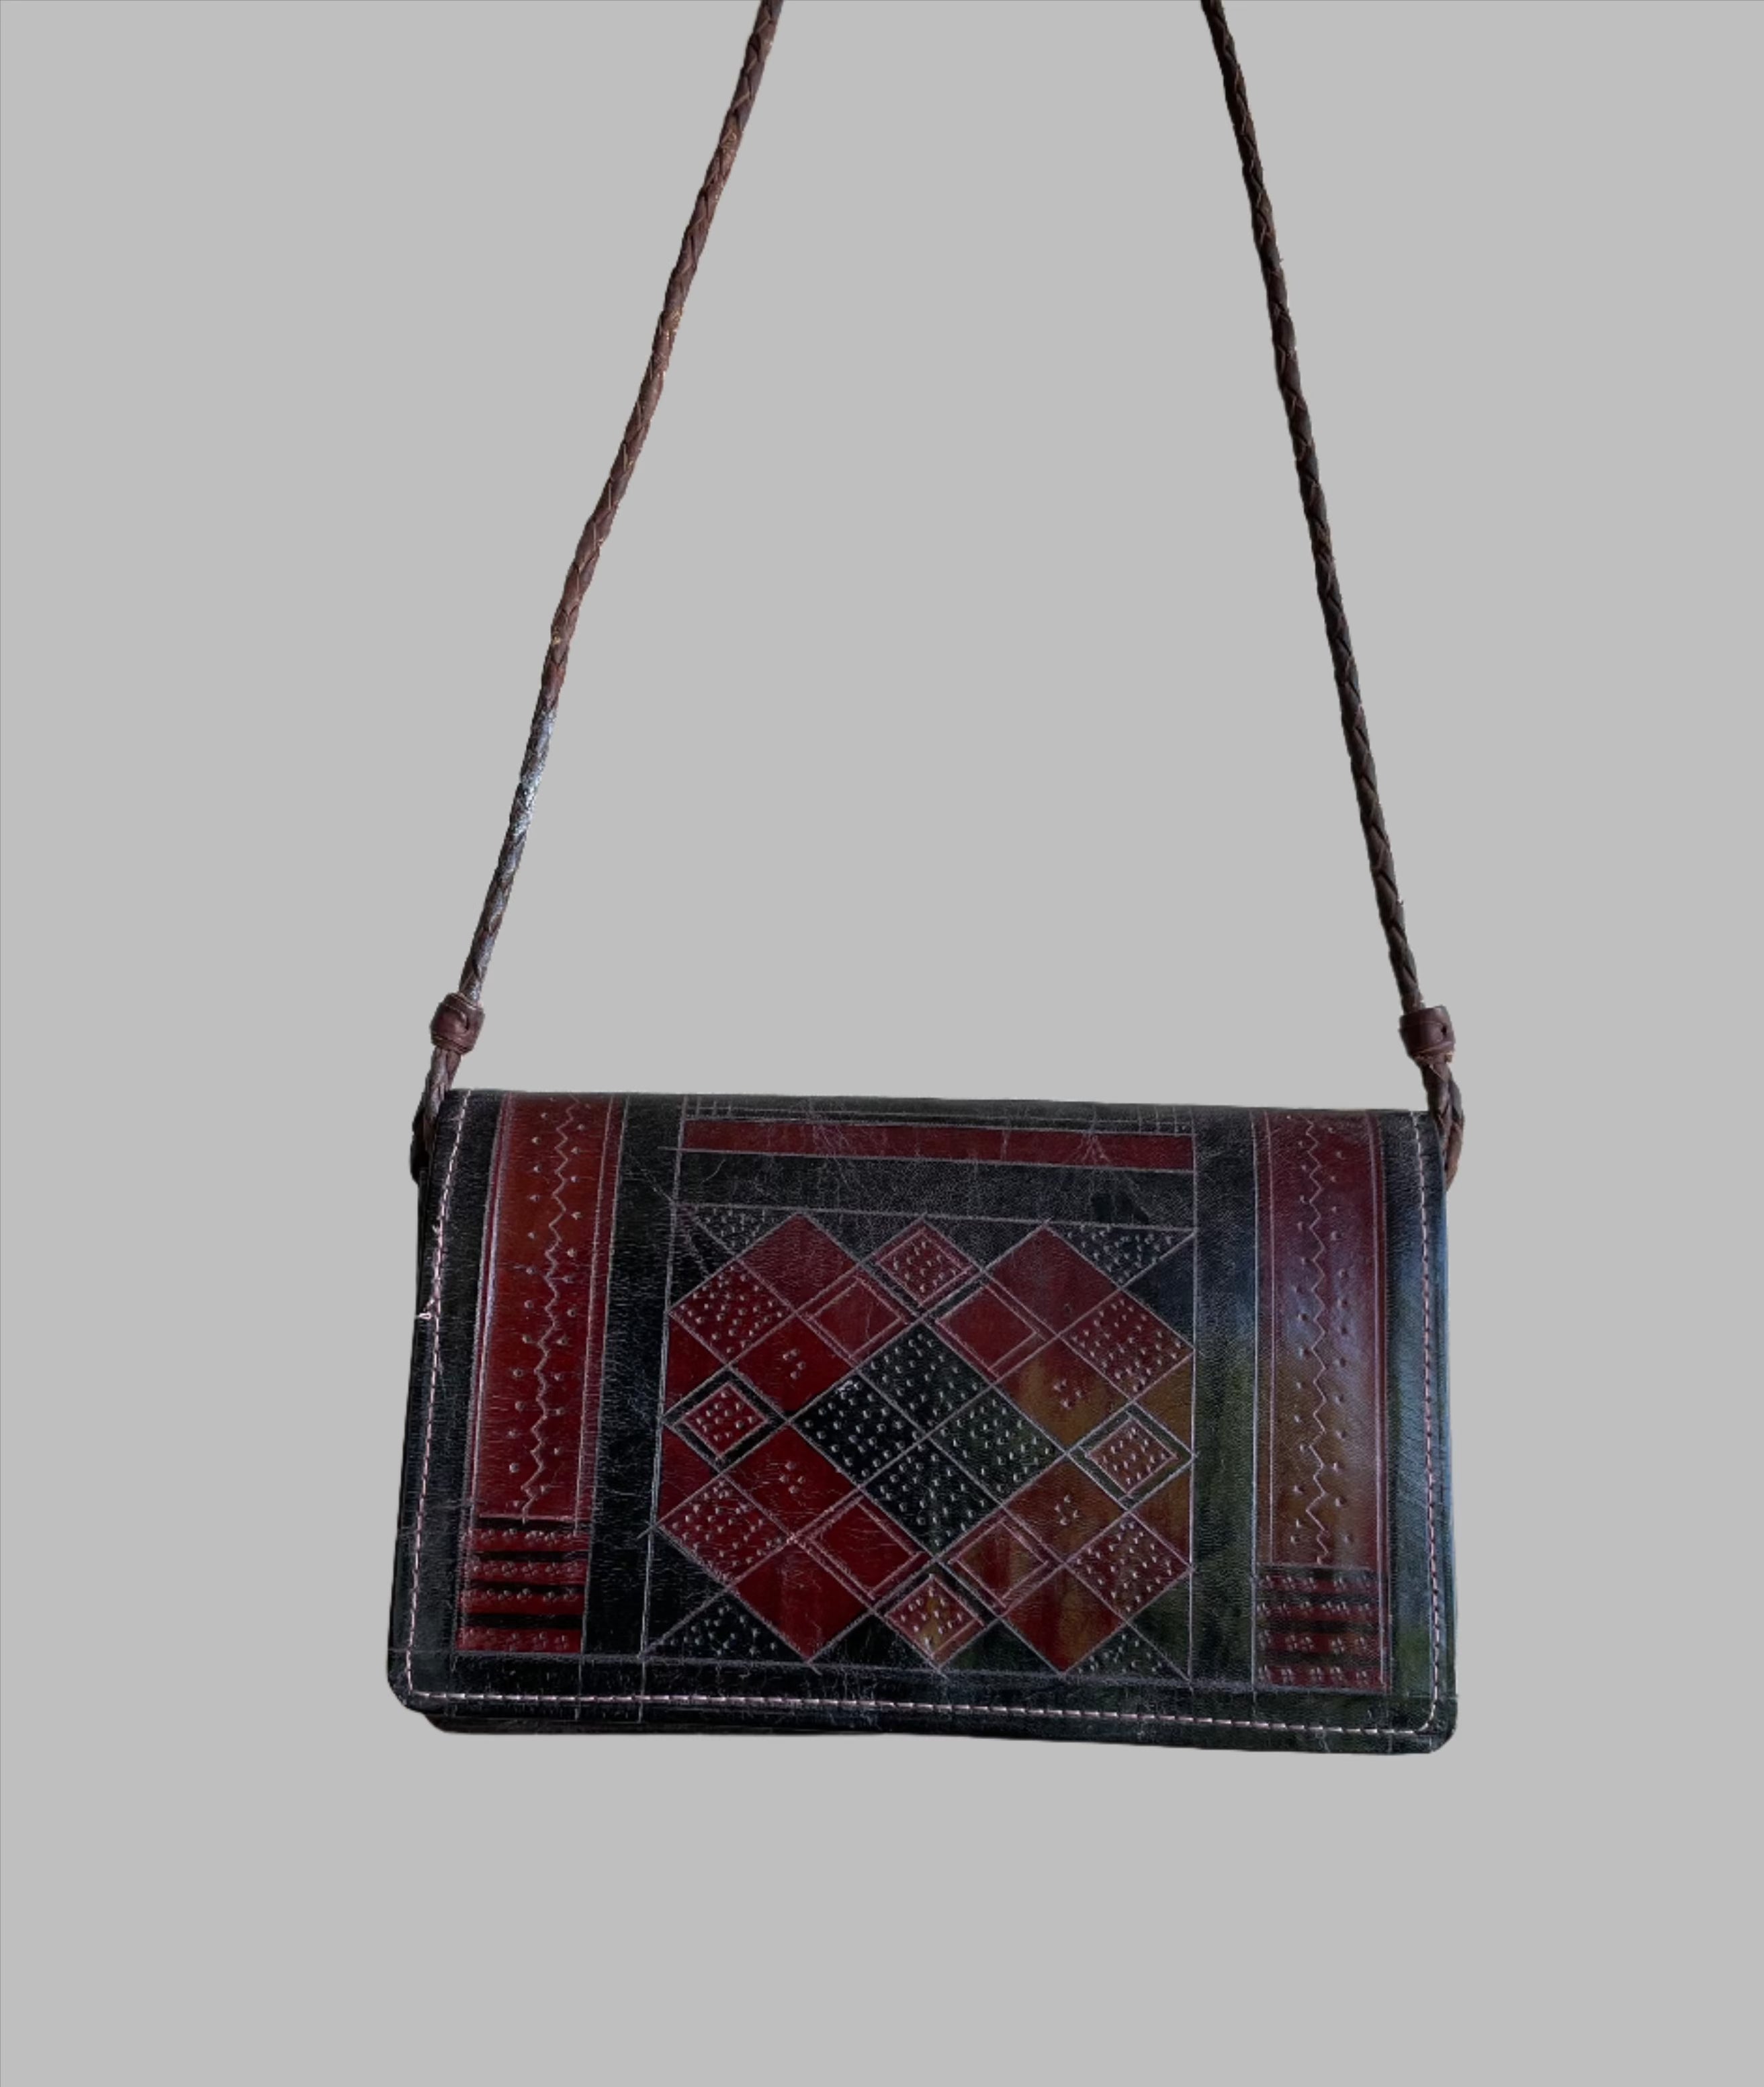 Handcrafted Bags - African Plural Art - Bags- African Art - Handbags - Wallets - Cases - Tuareg Leather Handbag, Fulani Clutch Bag, Handmade Vintage Style